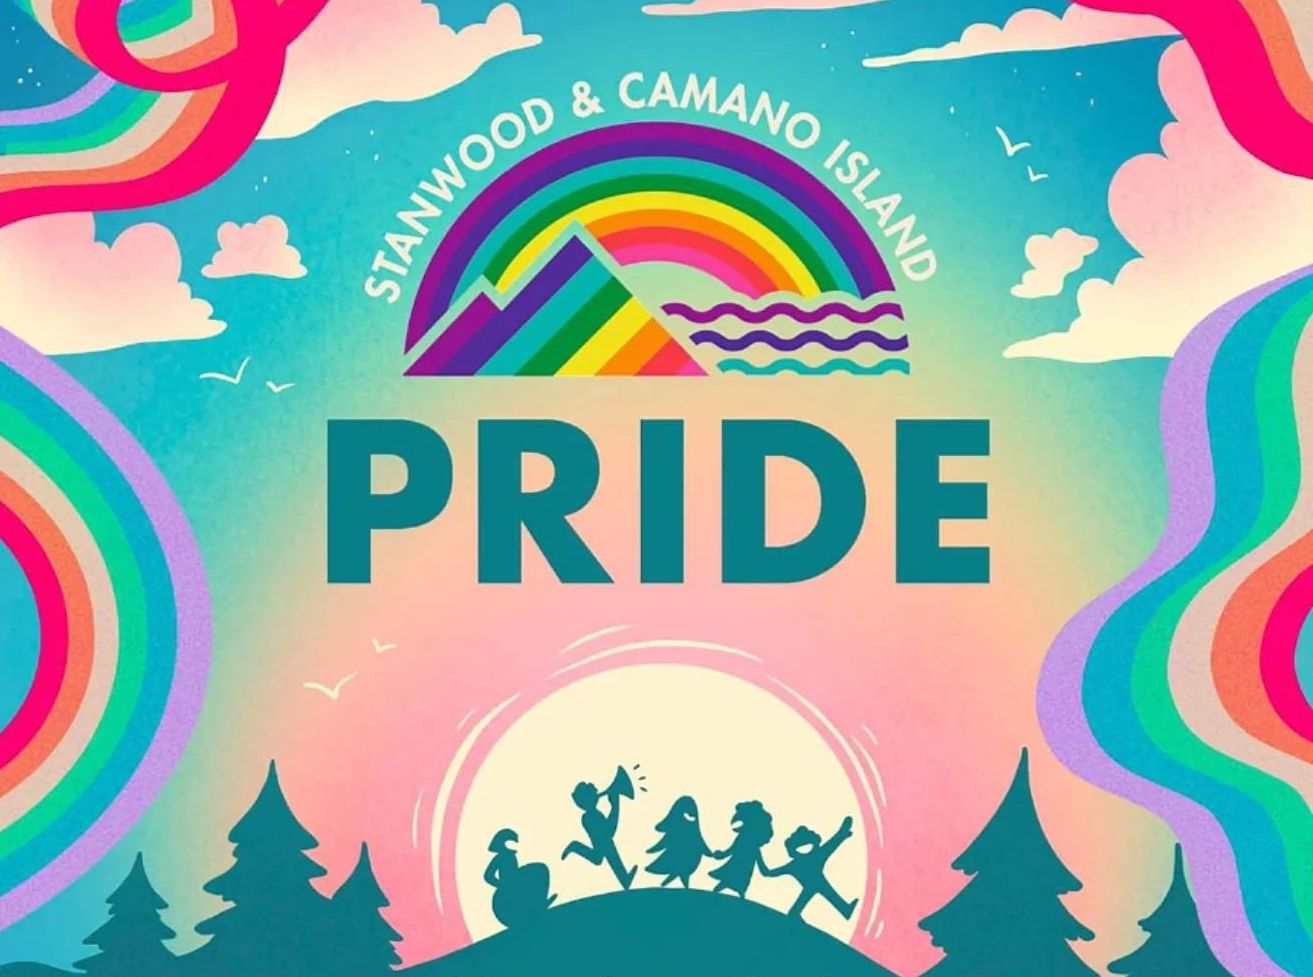 Stanwood_Camano Pride